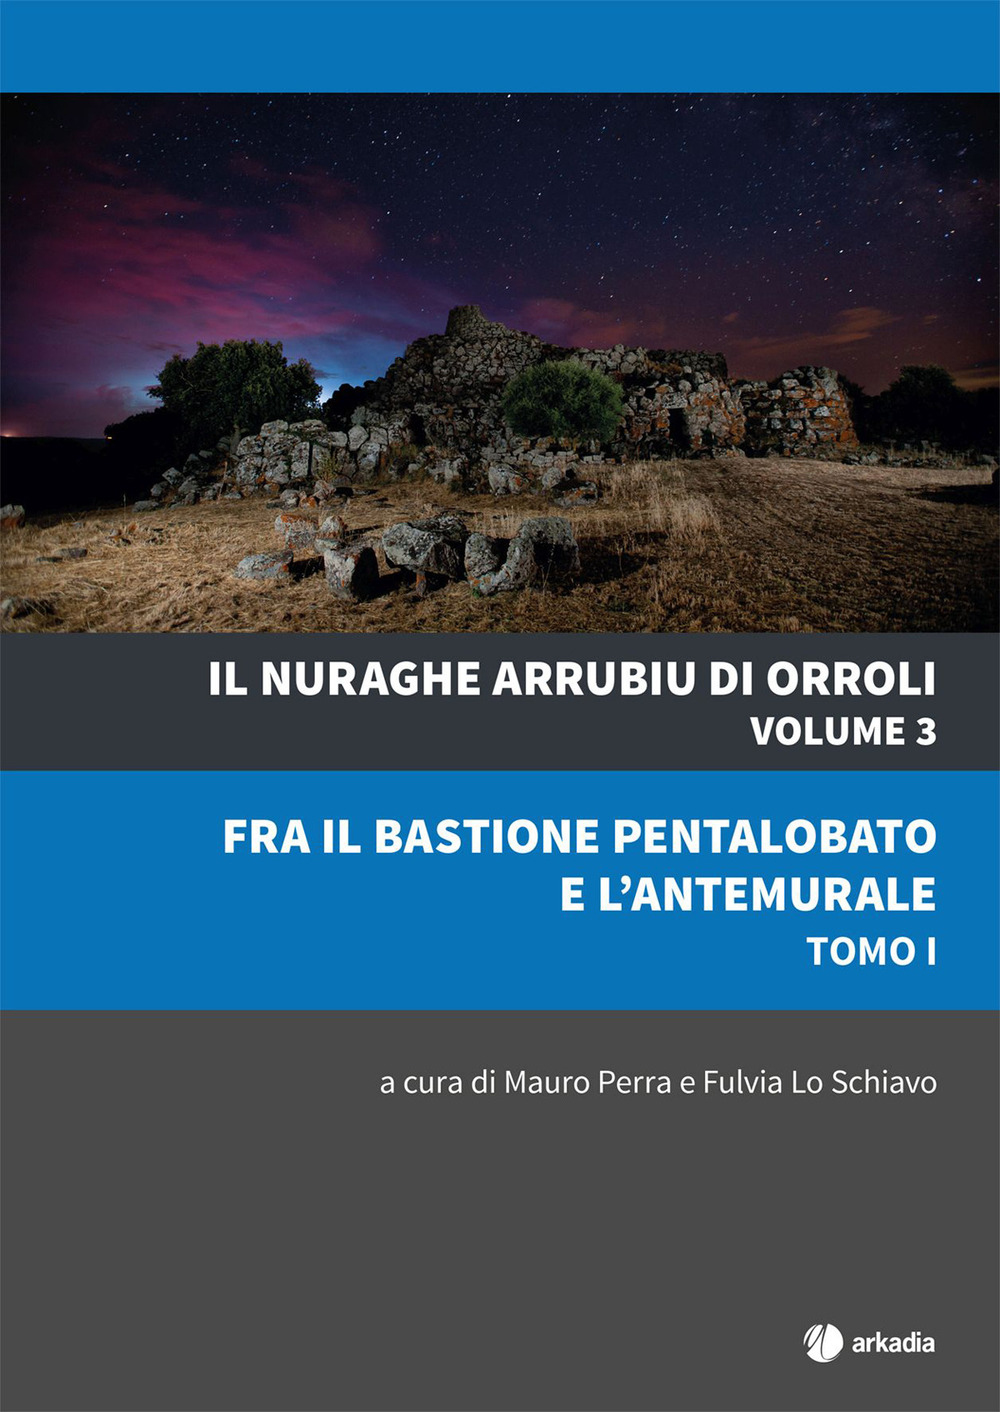 Il nuraghe Arrubiu di Orroli. Vol. 3/1: Fra il bastione pentalobato e l'antemurale